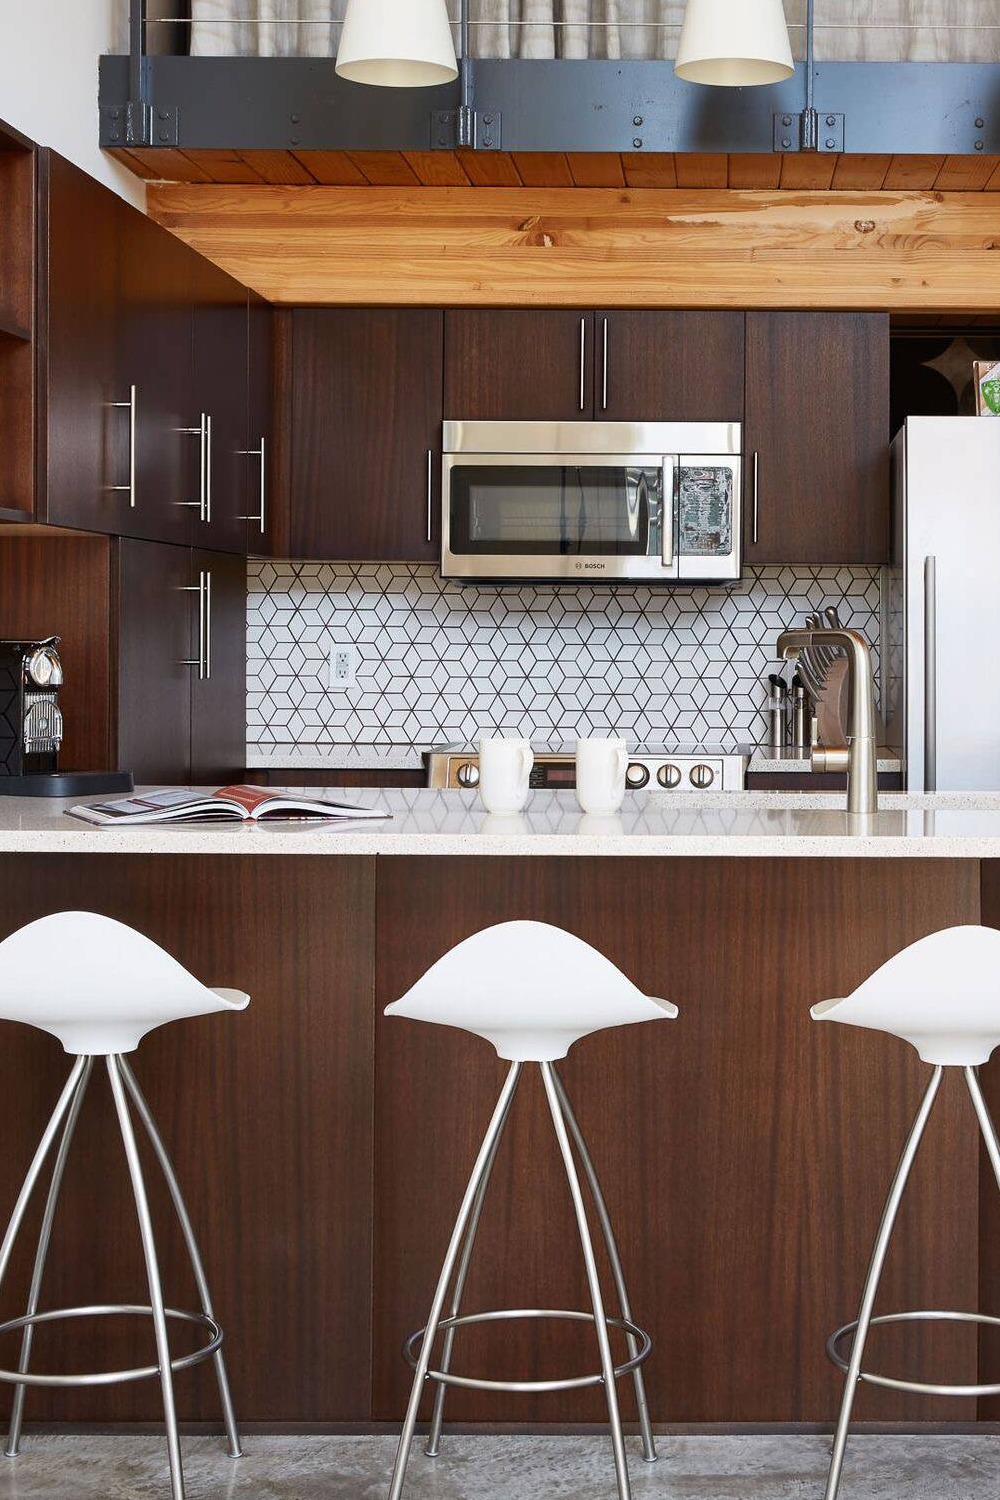 Dark Wood Cabinets White Backsplash Quartz Countertops Ceramic Tile Kitchen Backsplash Light Gray Bold Move